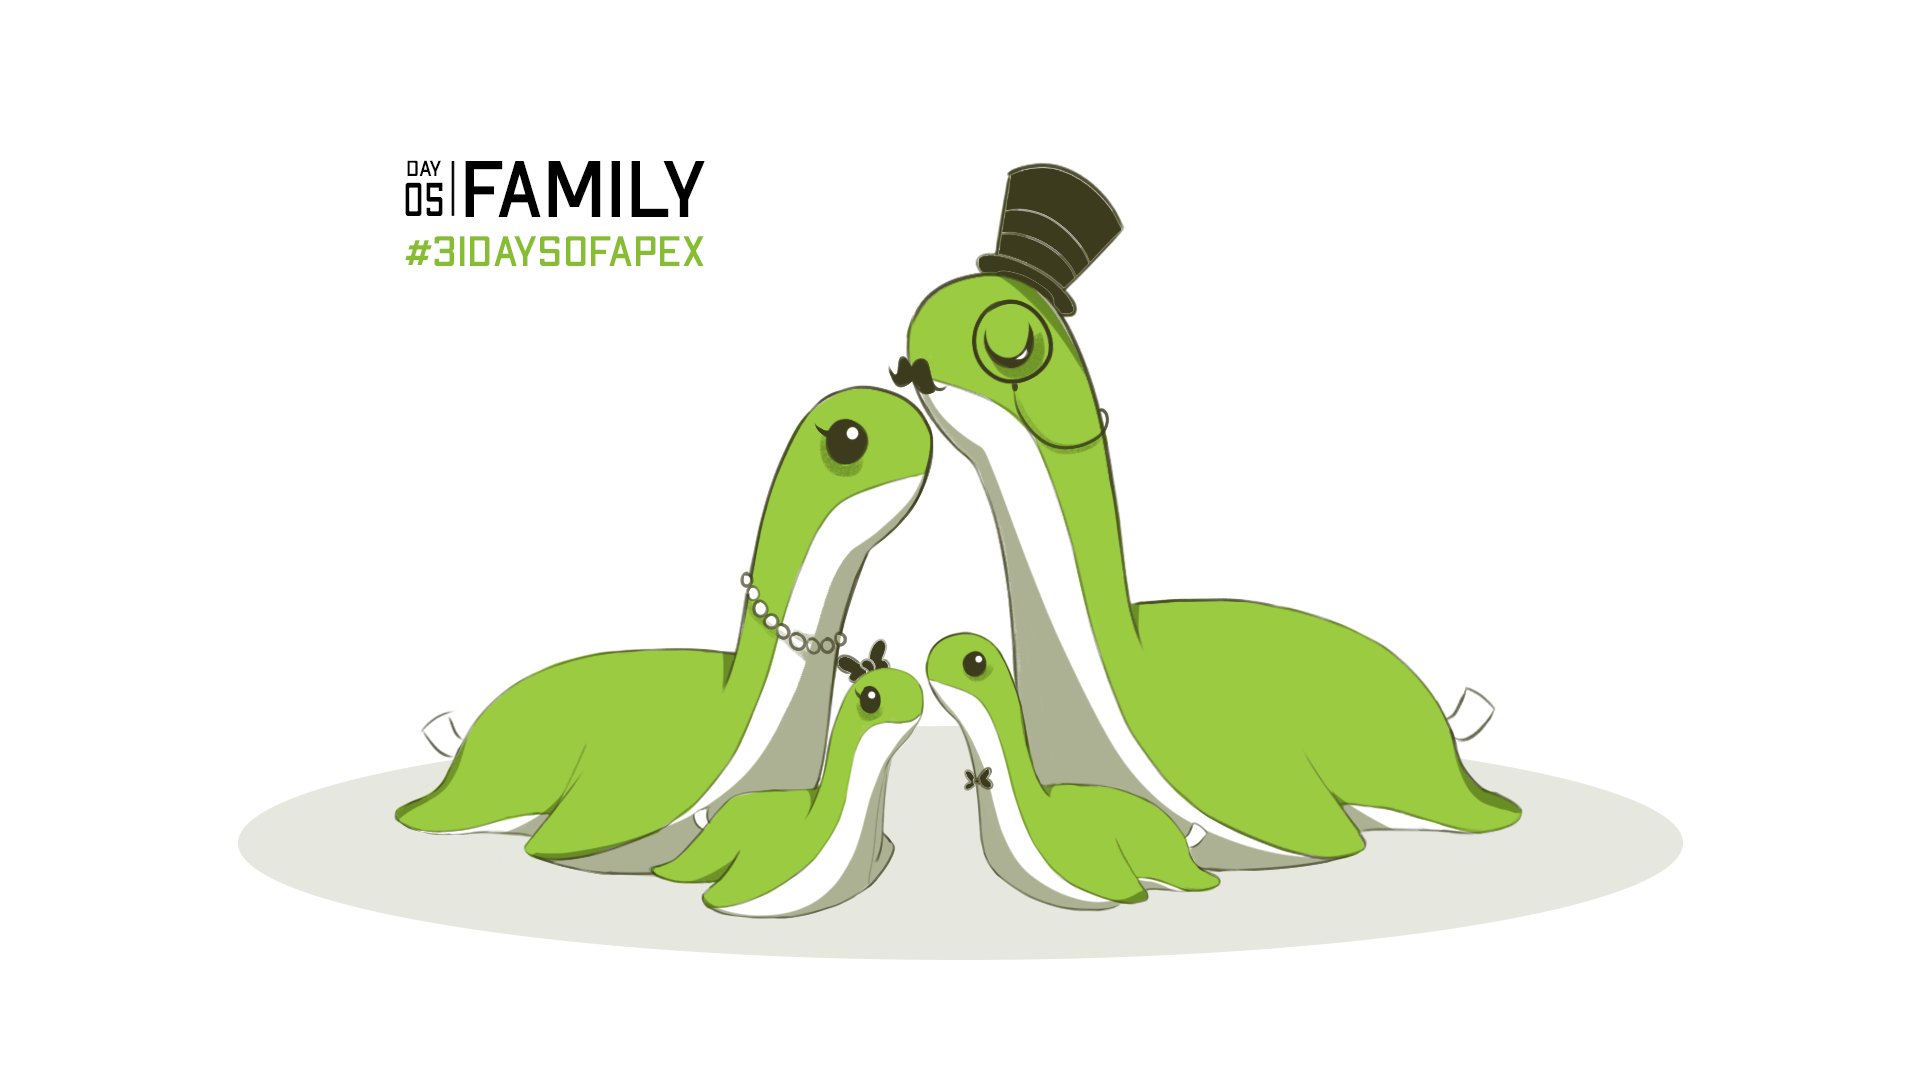 The Nessie Family